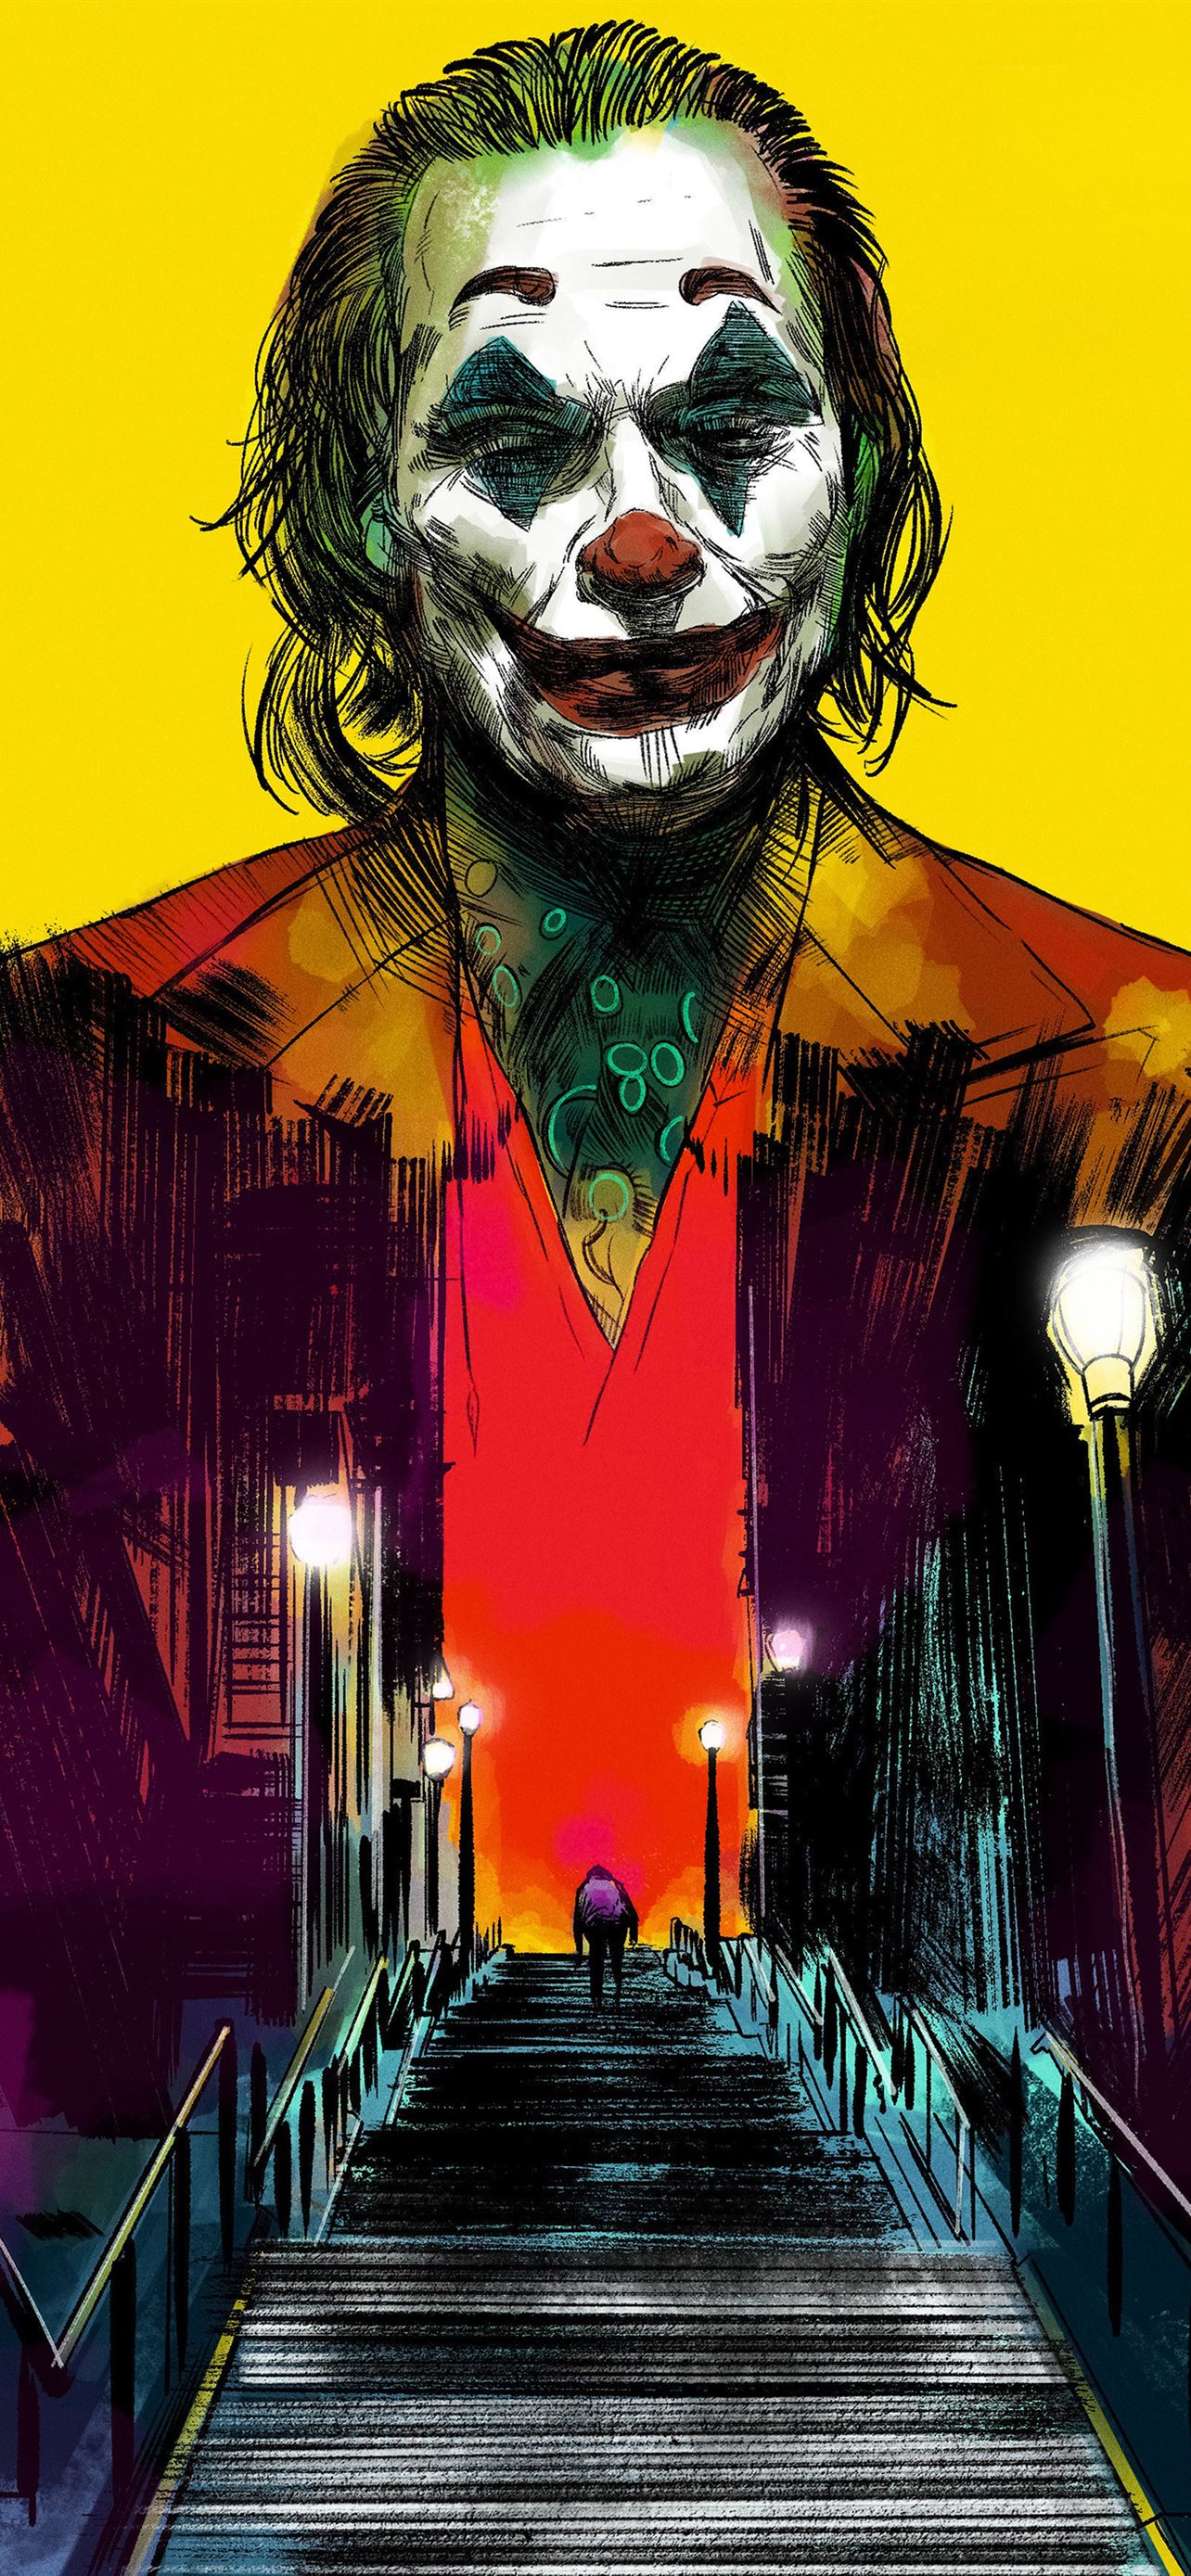 Joker download the new version